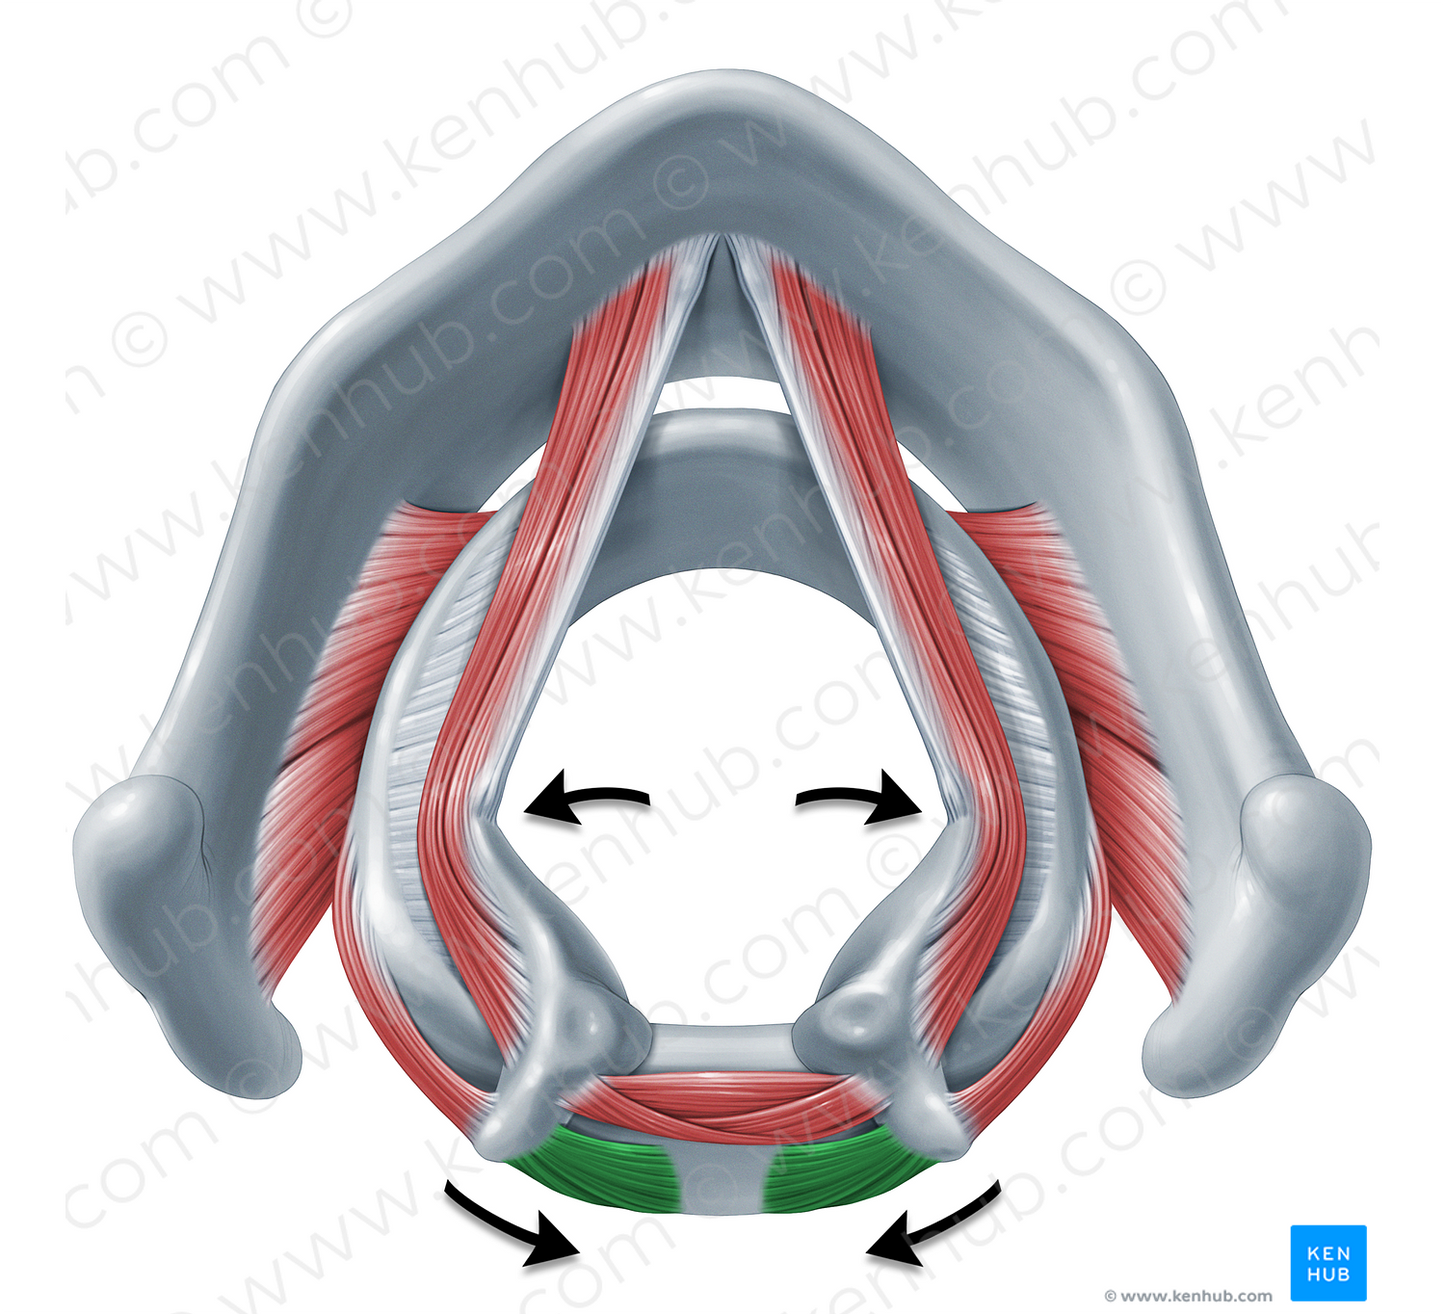 Action of posterior cricoarytenoid muscle (#18341)